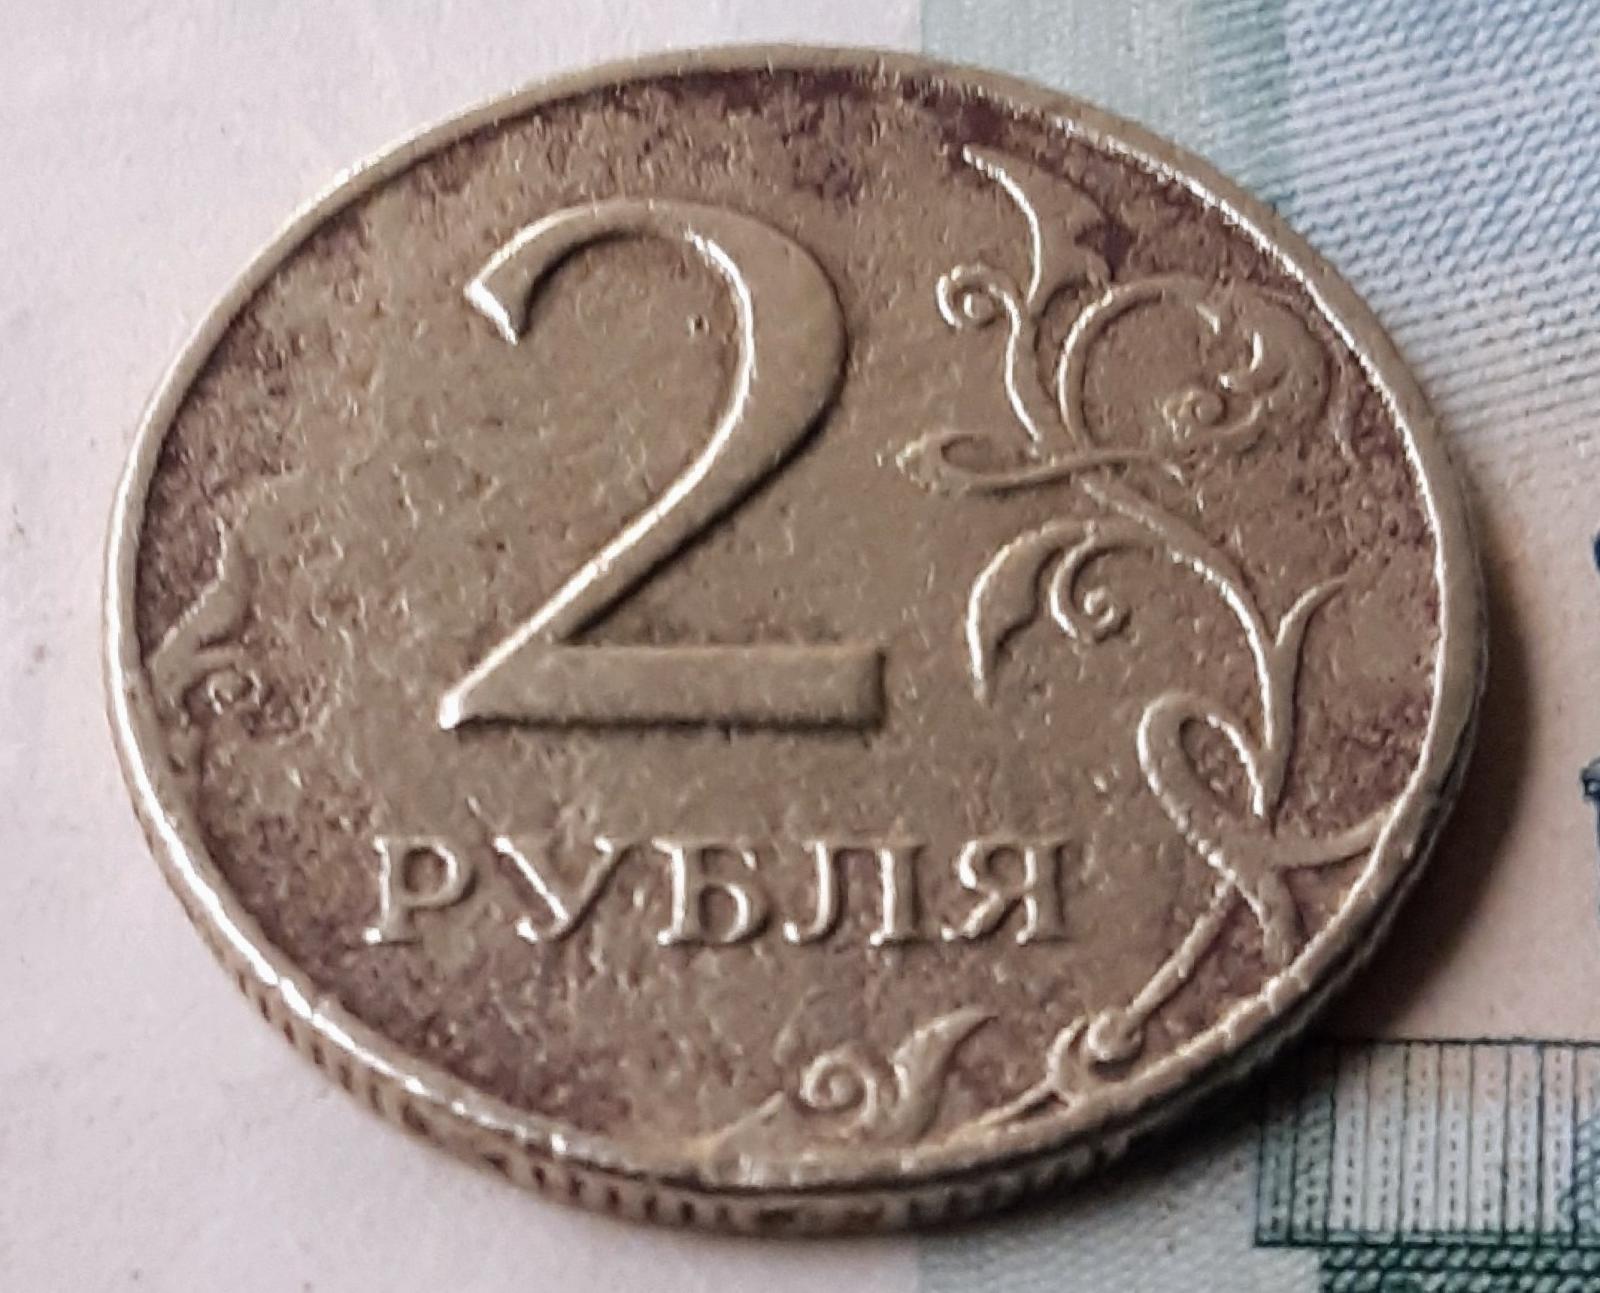 1 2 3 рубля. Засорение штемпеля на монетах. Монета 2 рубля 1997 года без монетного двора. 2 Рубля в день. 2 Рубля фото.